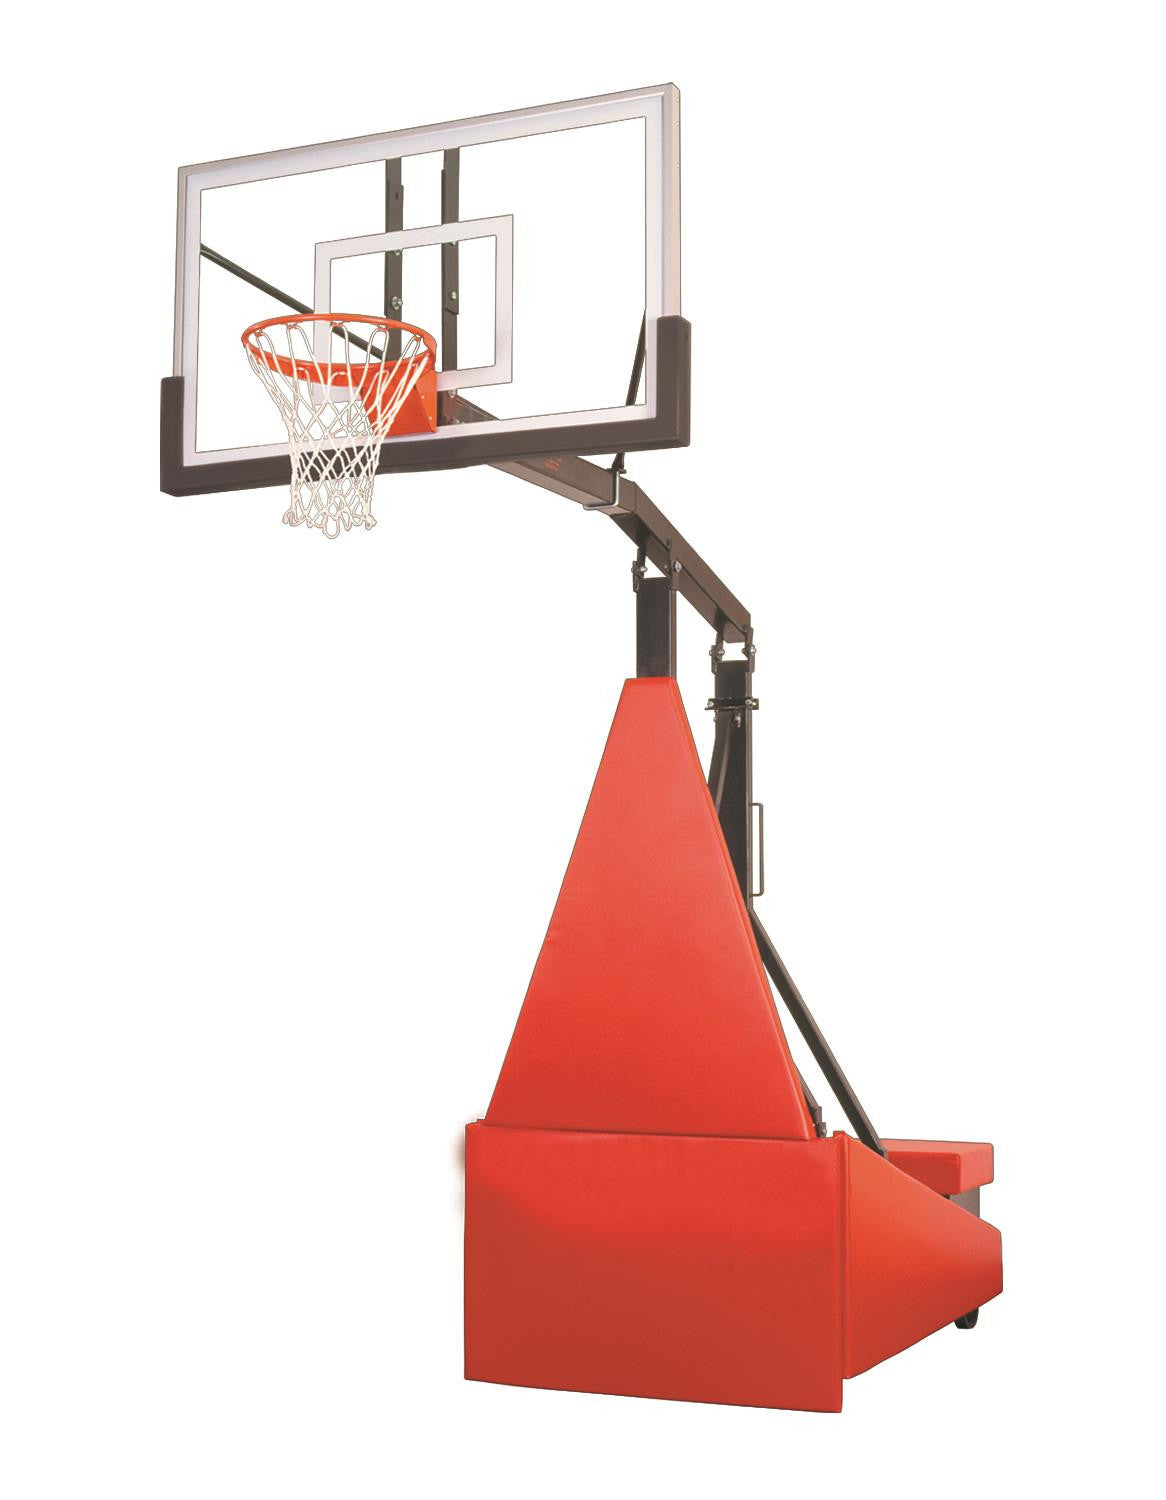 First Team Storm Select Portable Adjustable Basketball Hoop 60 inch Acrylic